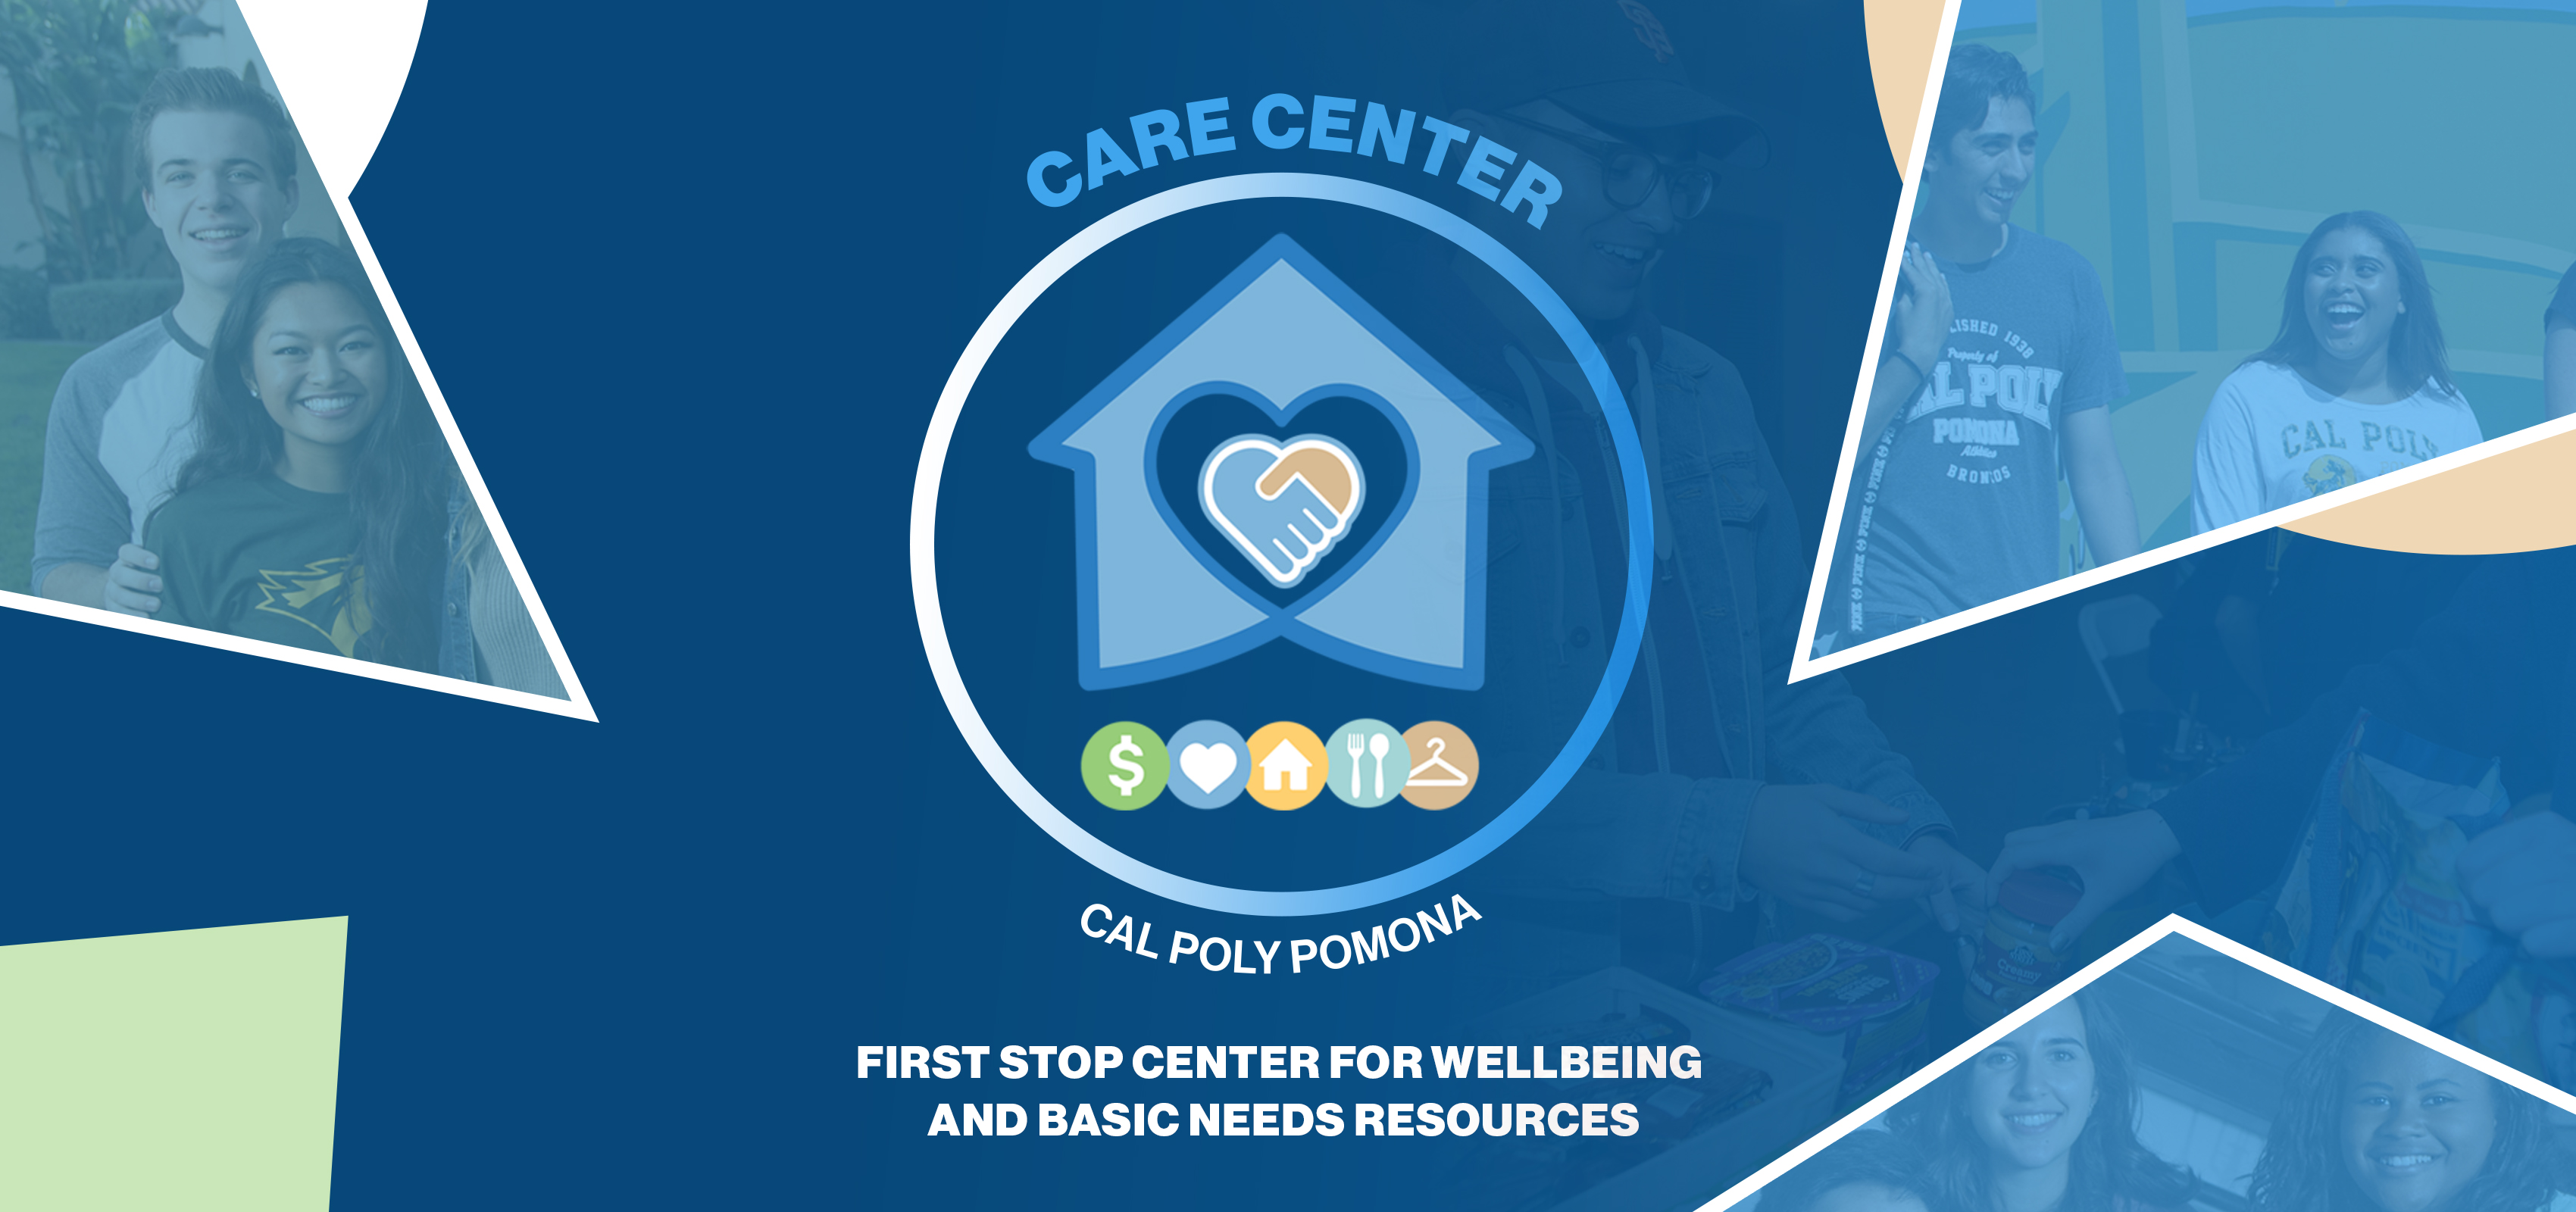 Care Center Banner